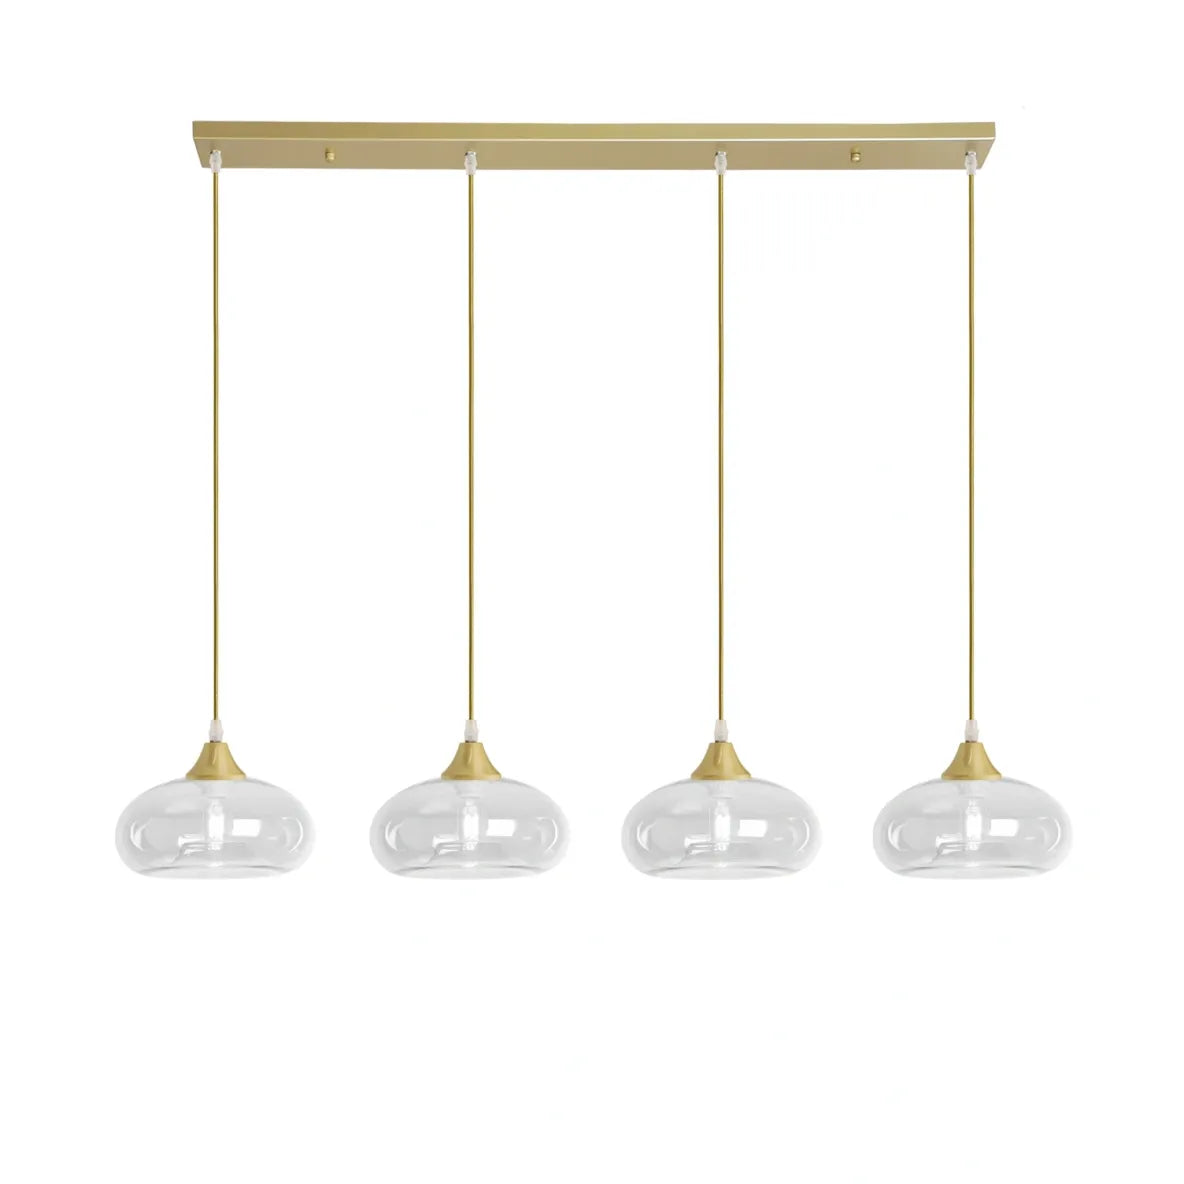 Murano 4 Light Gold Bar with Mushroom Glass shades